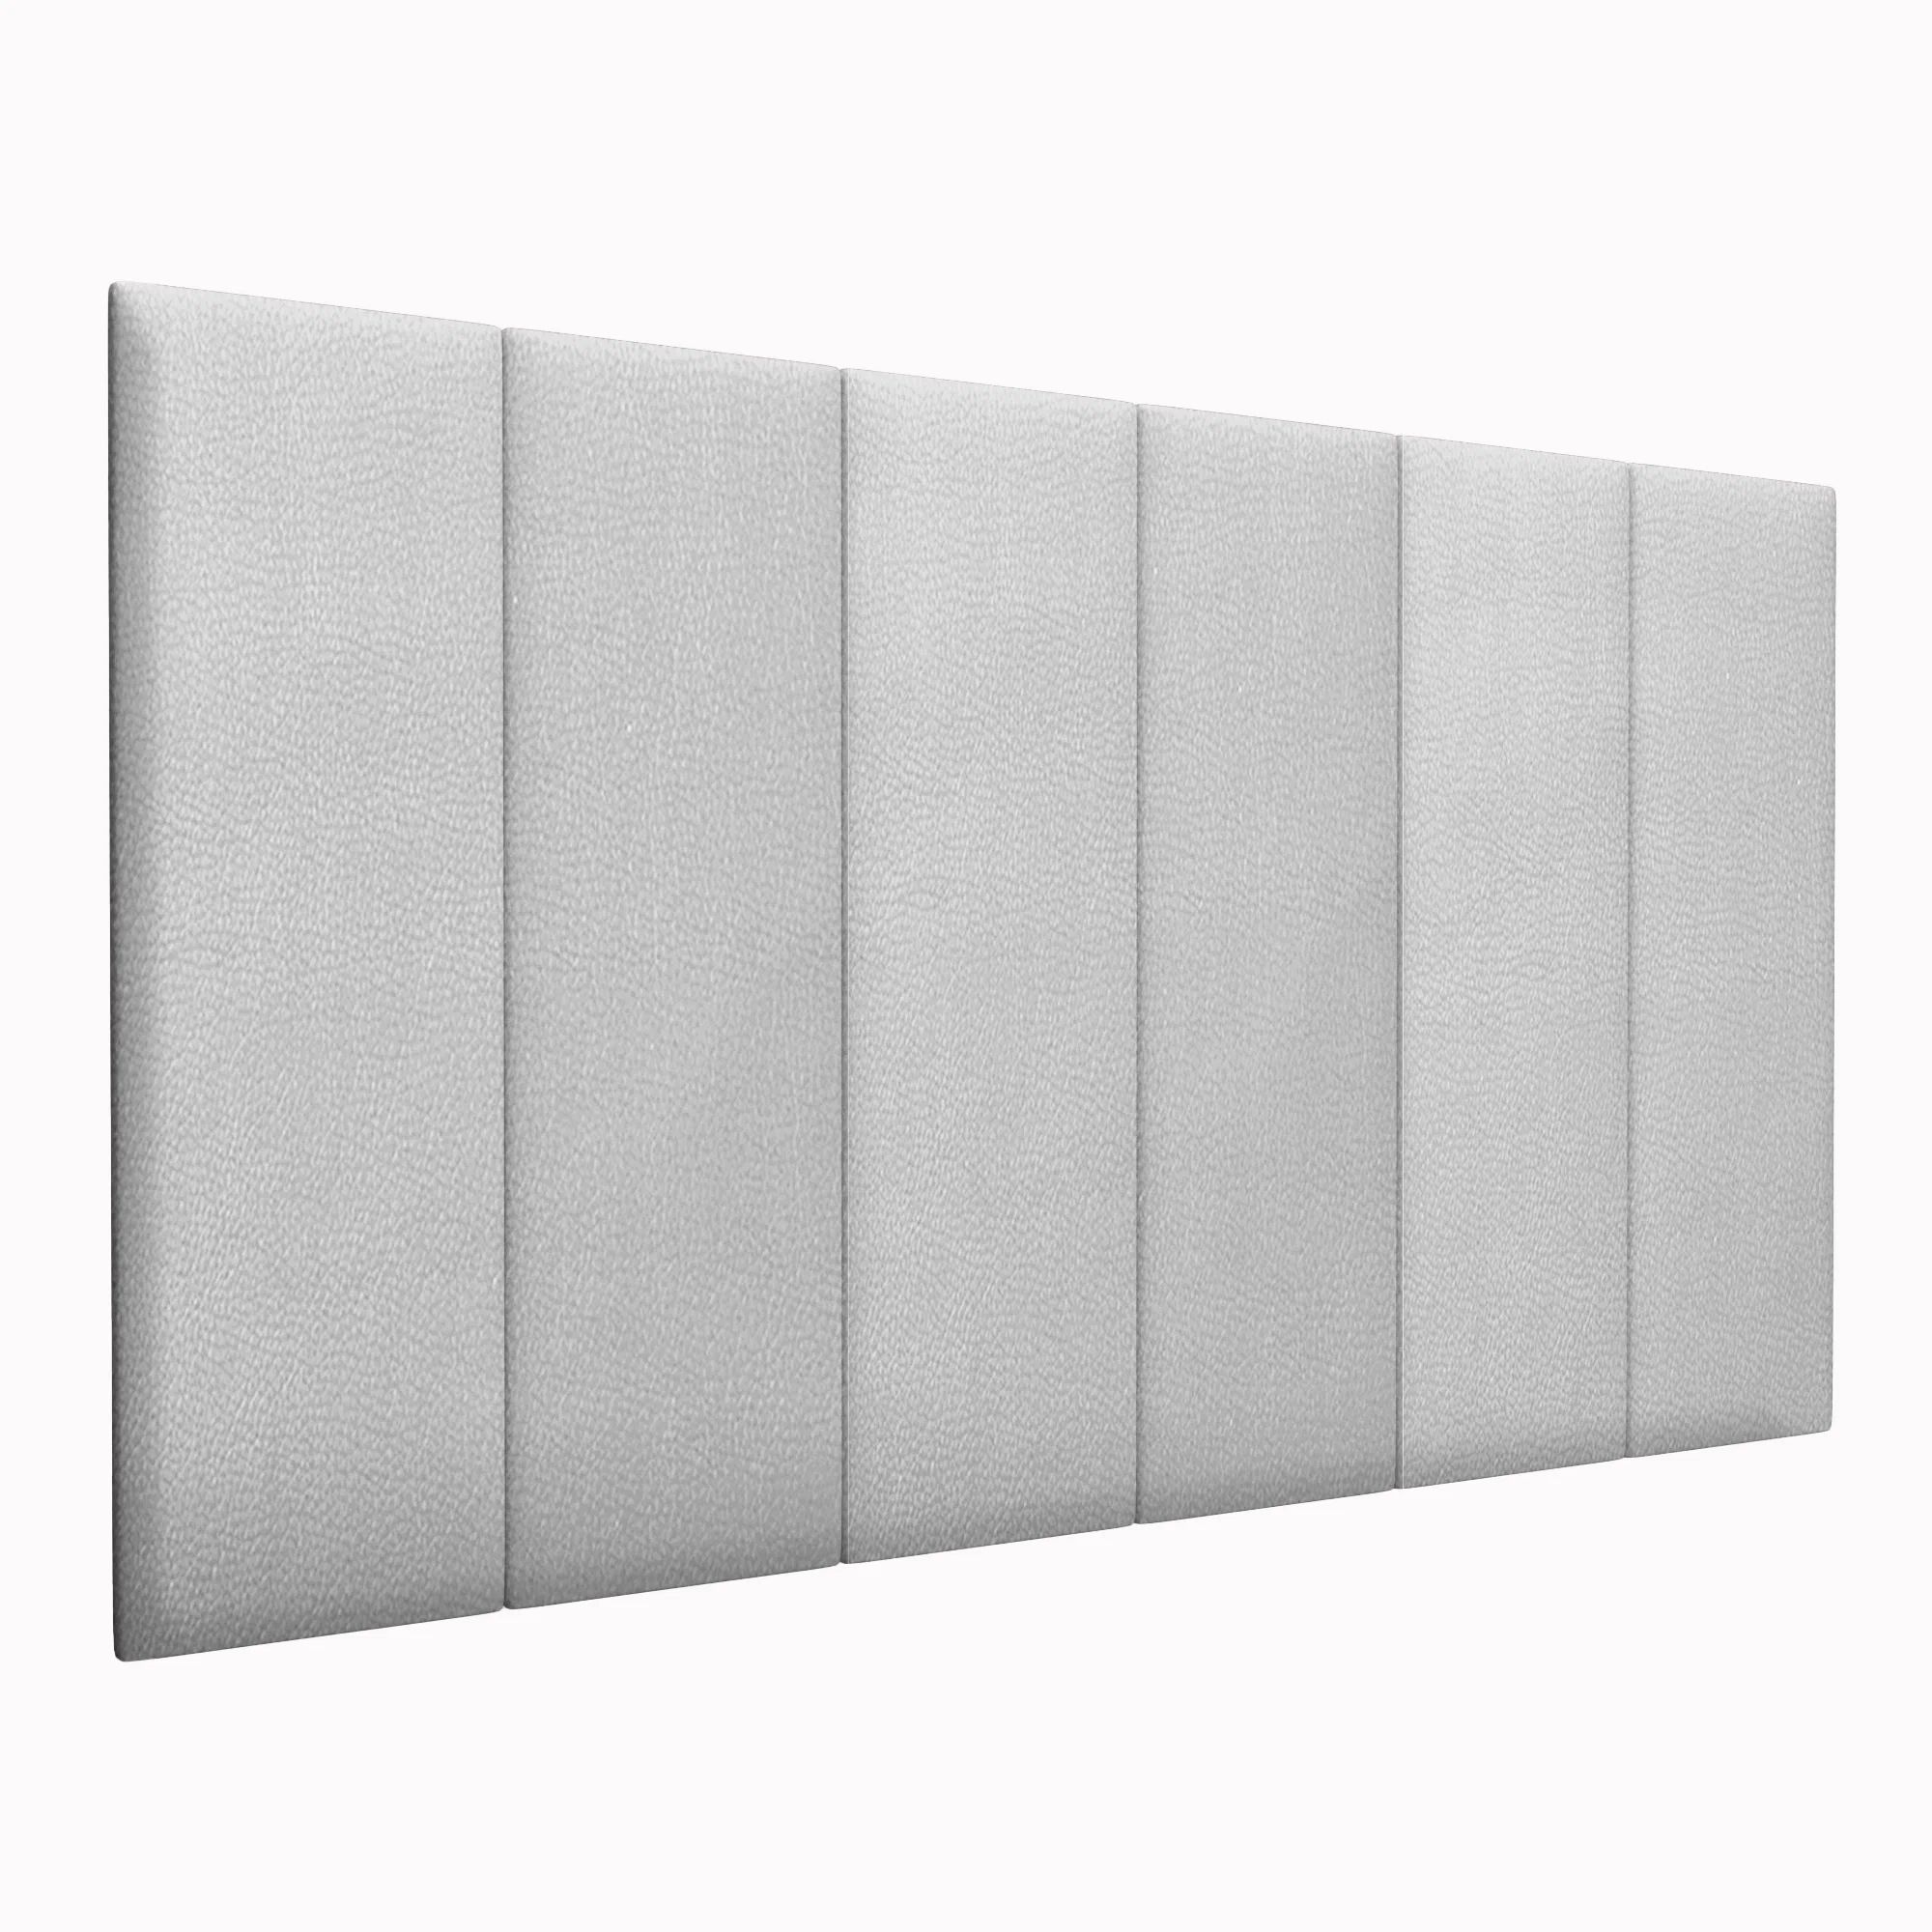 Стеновая панель Eco Leather Silver 30х100 см 4 шт.